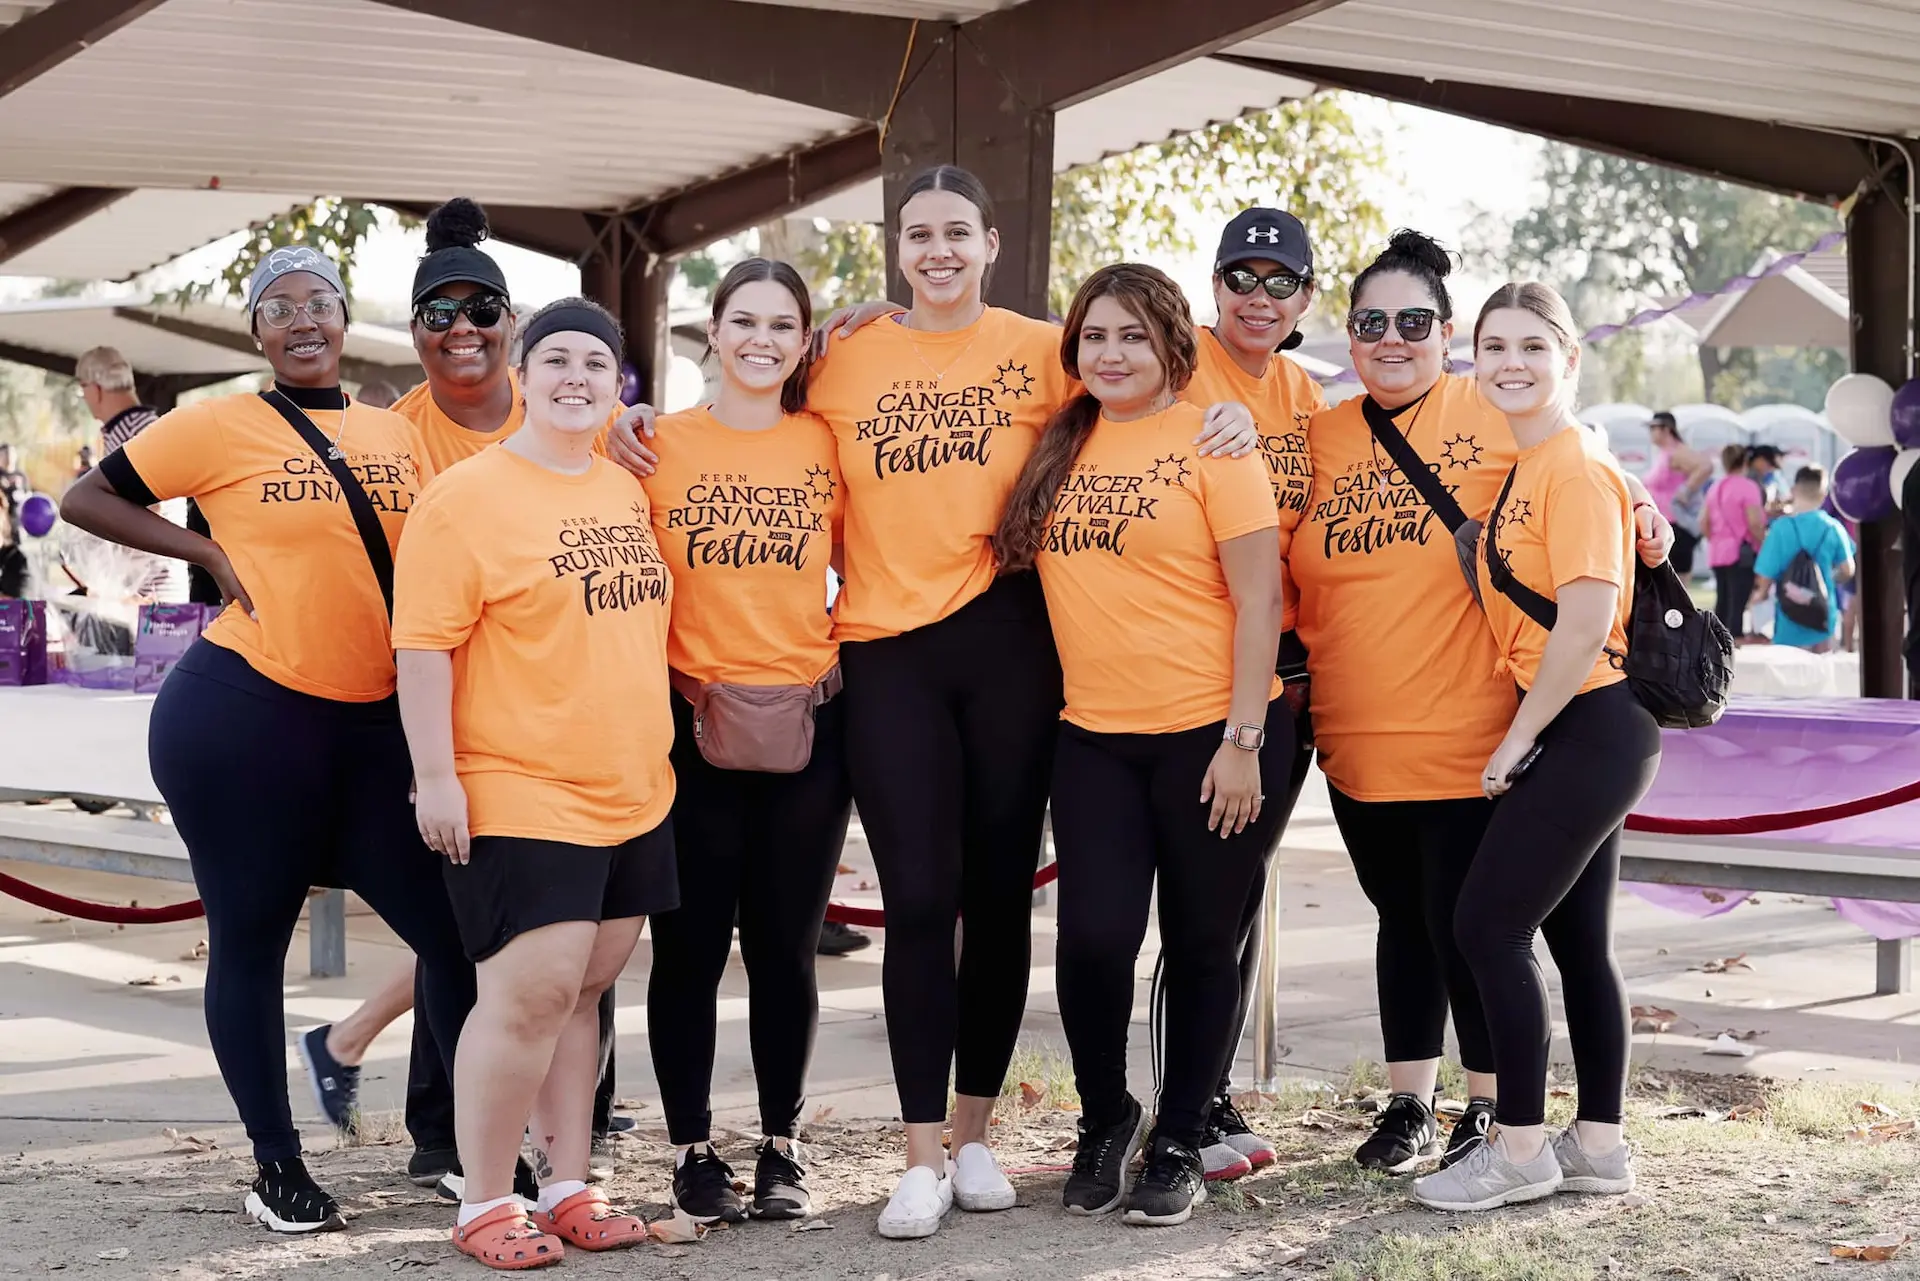 A group all wearing orange at the Kern Cancer Run Walk